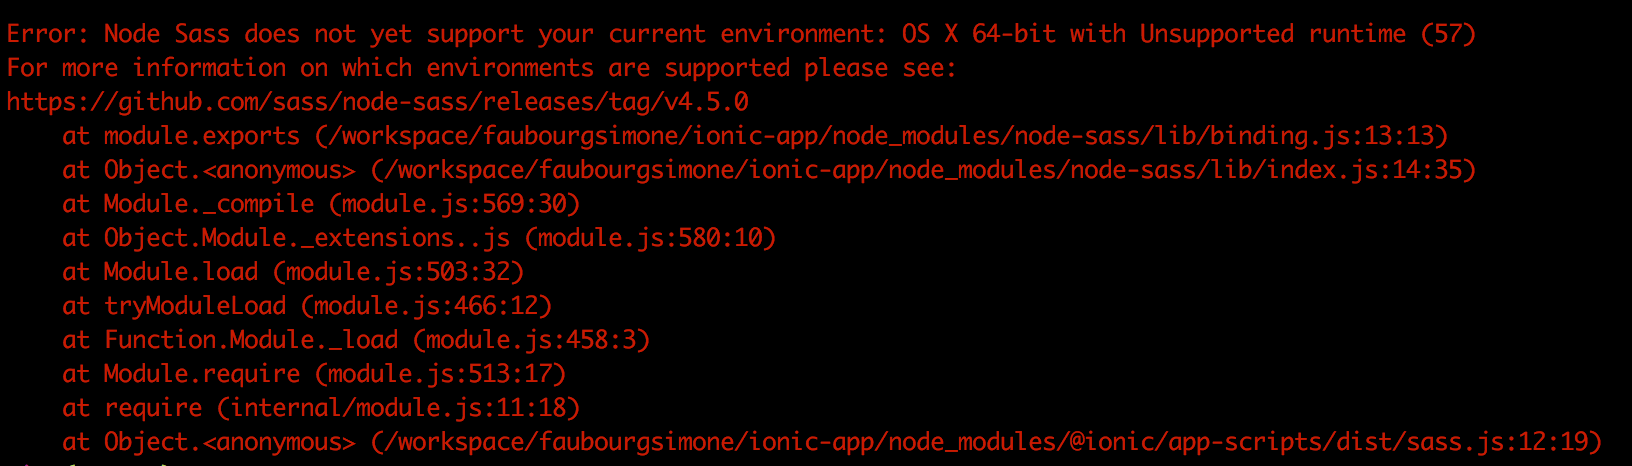 Image result for node sass errors